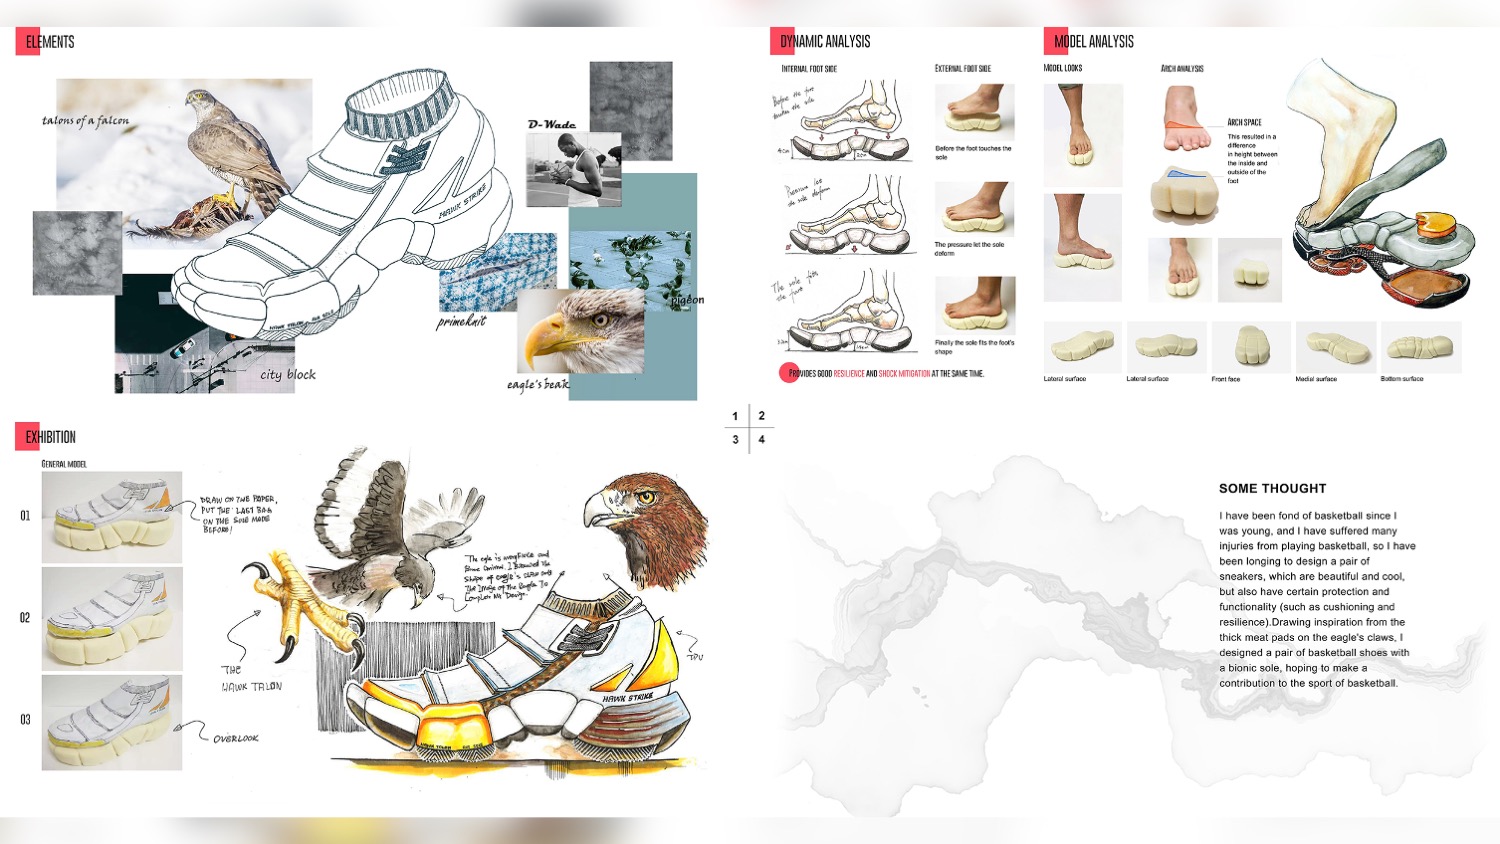 An informational graphic explaining an innovative sneaker design.